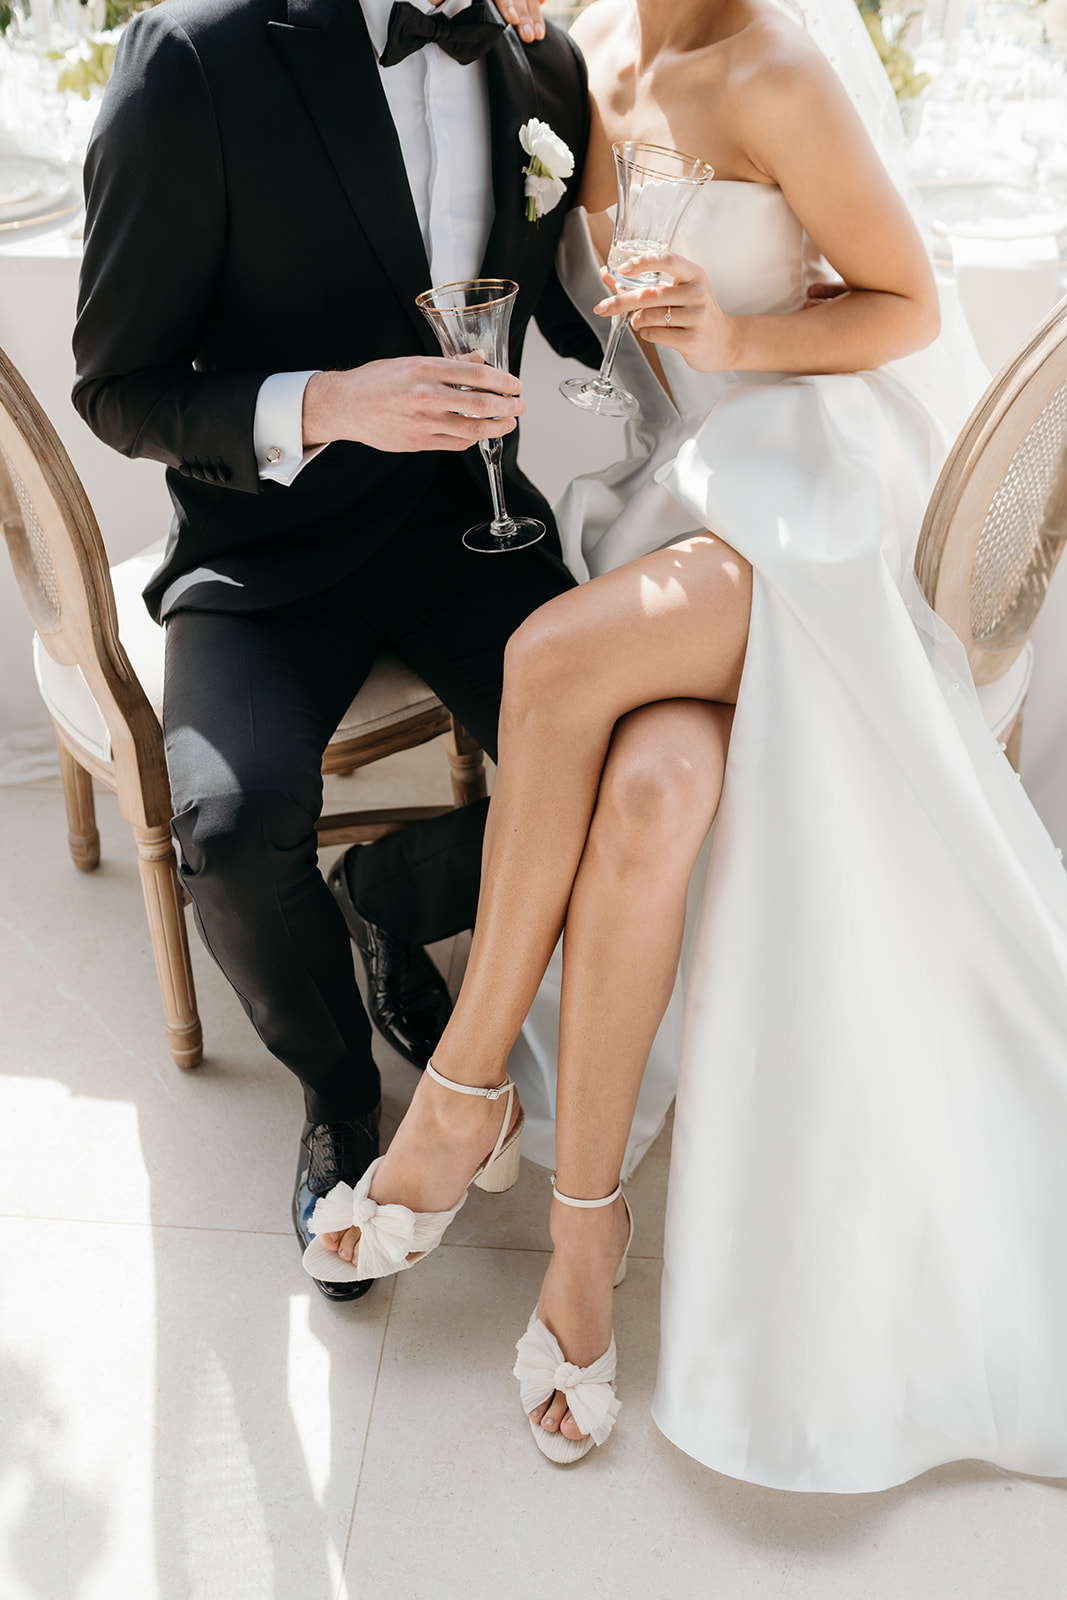 Luxury destination weddings in Croatia